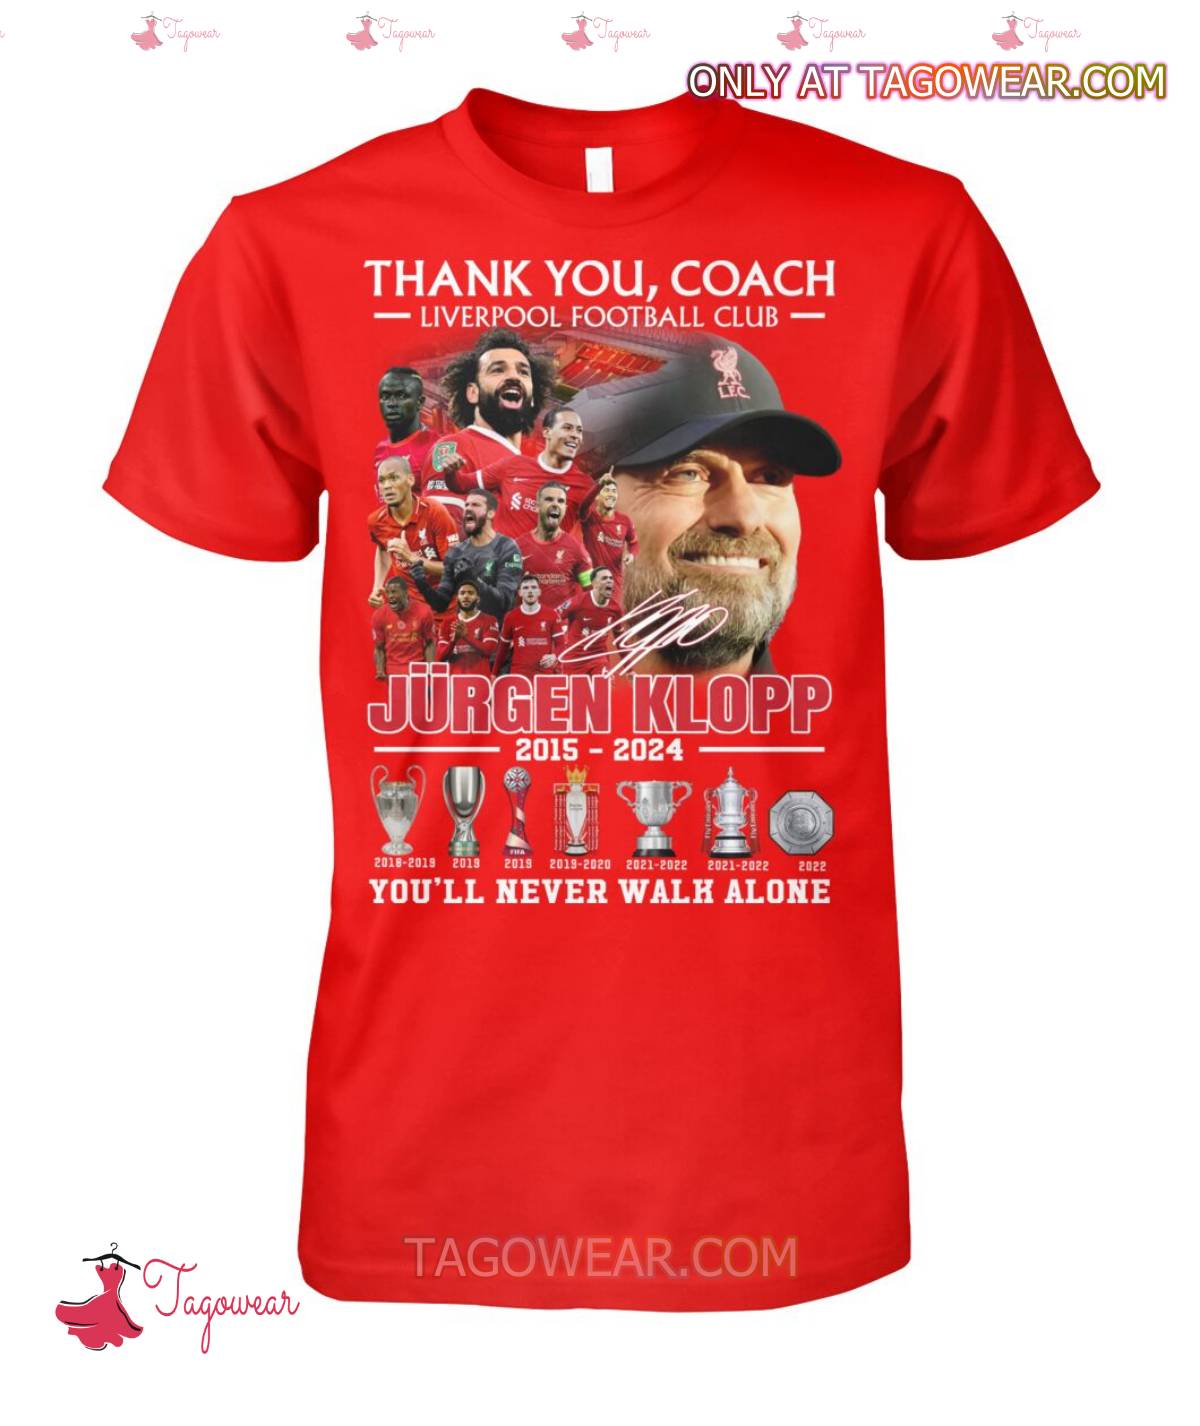 Thank You Coach Liverpool Football Club Jurgen Klopp 2015-2024 You'll Never Walk Alone Shirt a